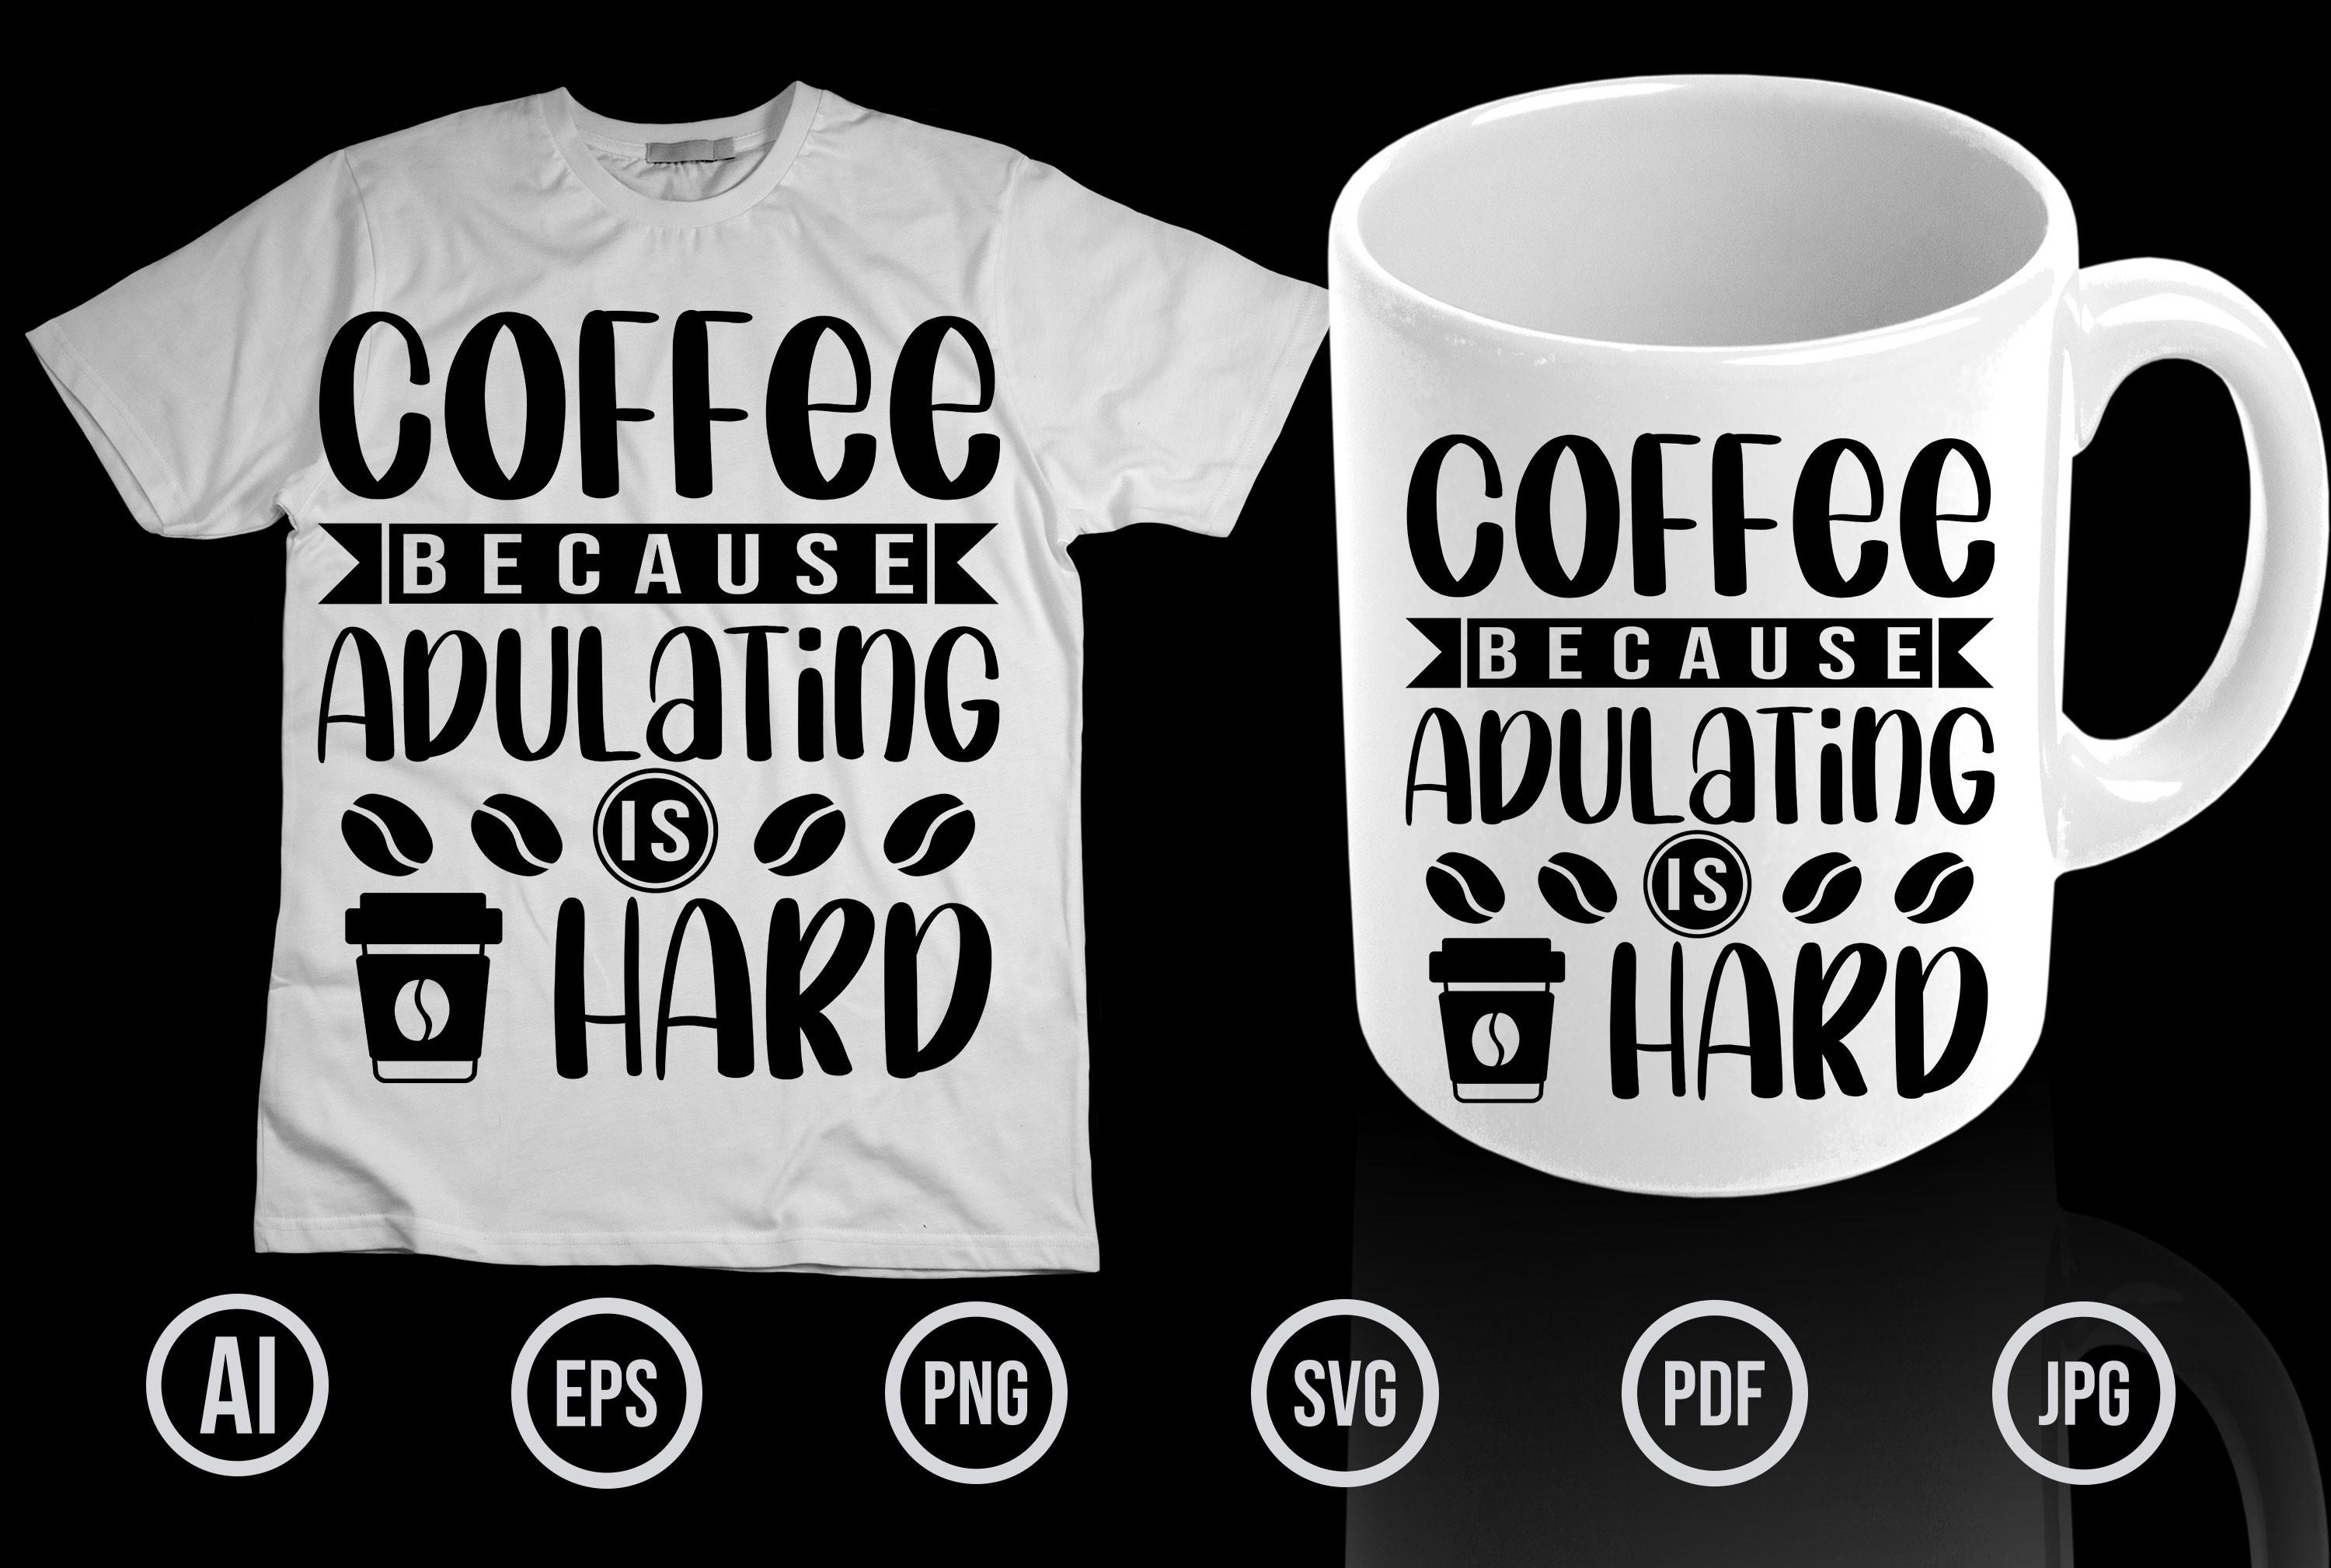 Coffee Because Adulating is Hard T-shirt